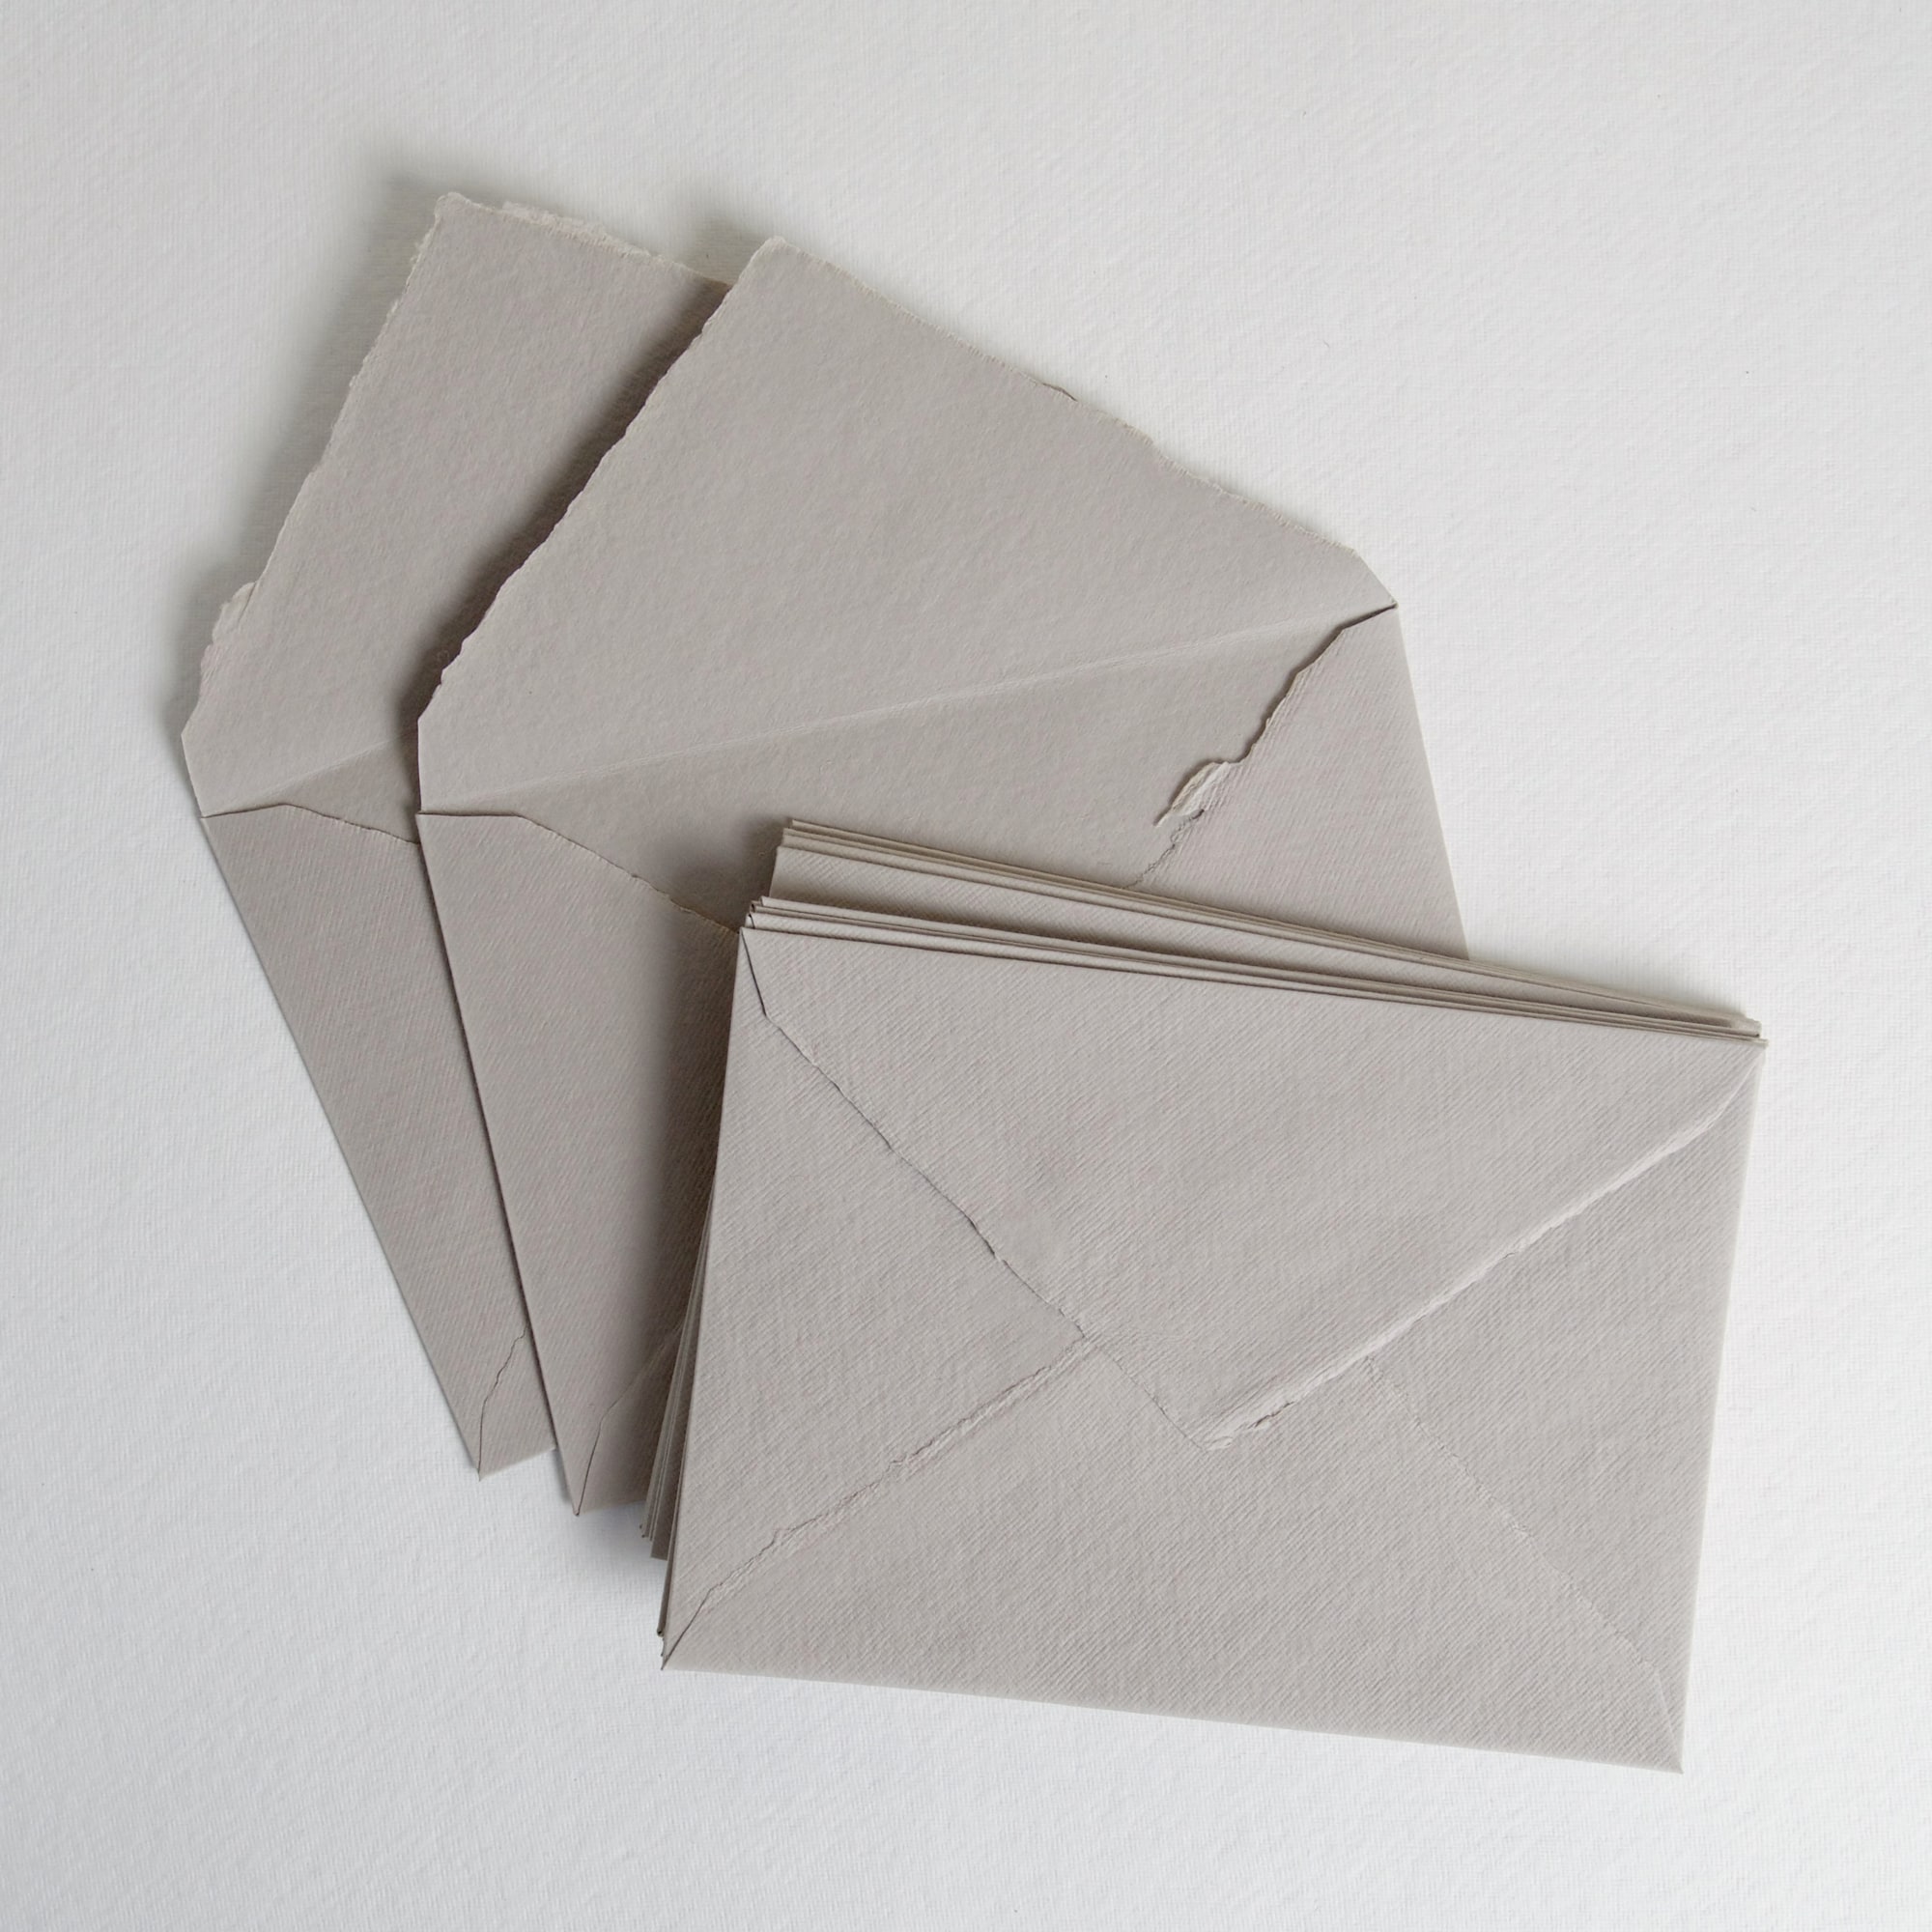 Light Grey, A6, 300 gsm – Deckle edge paper – Indian Cotton Paper Co.